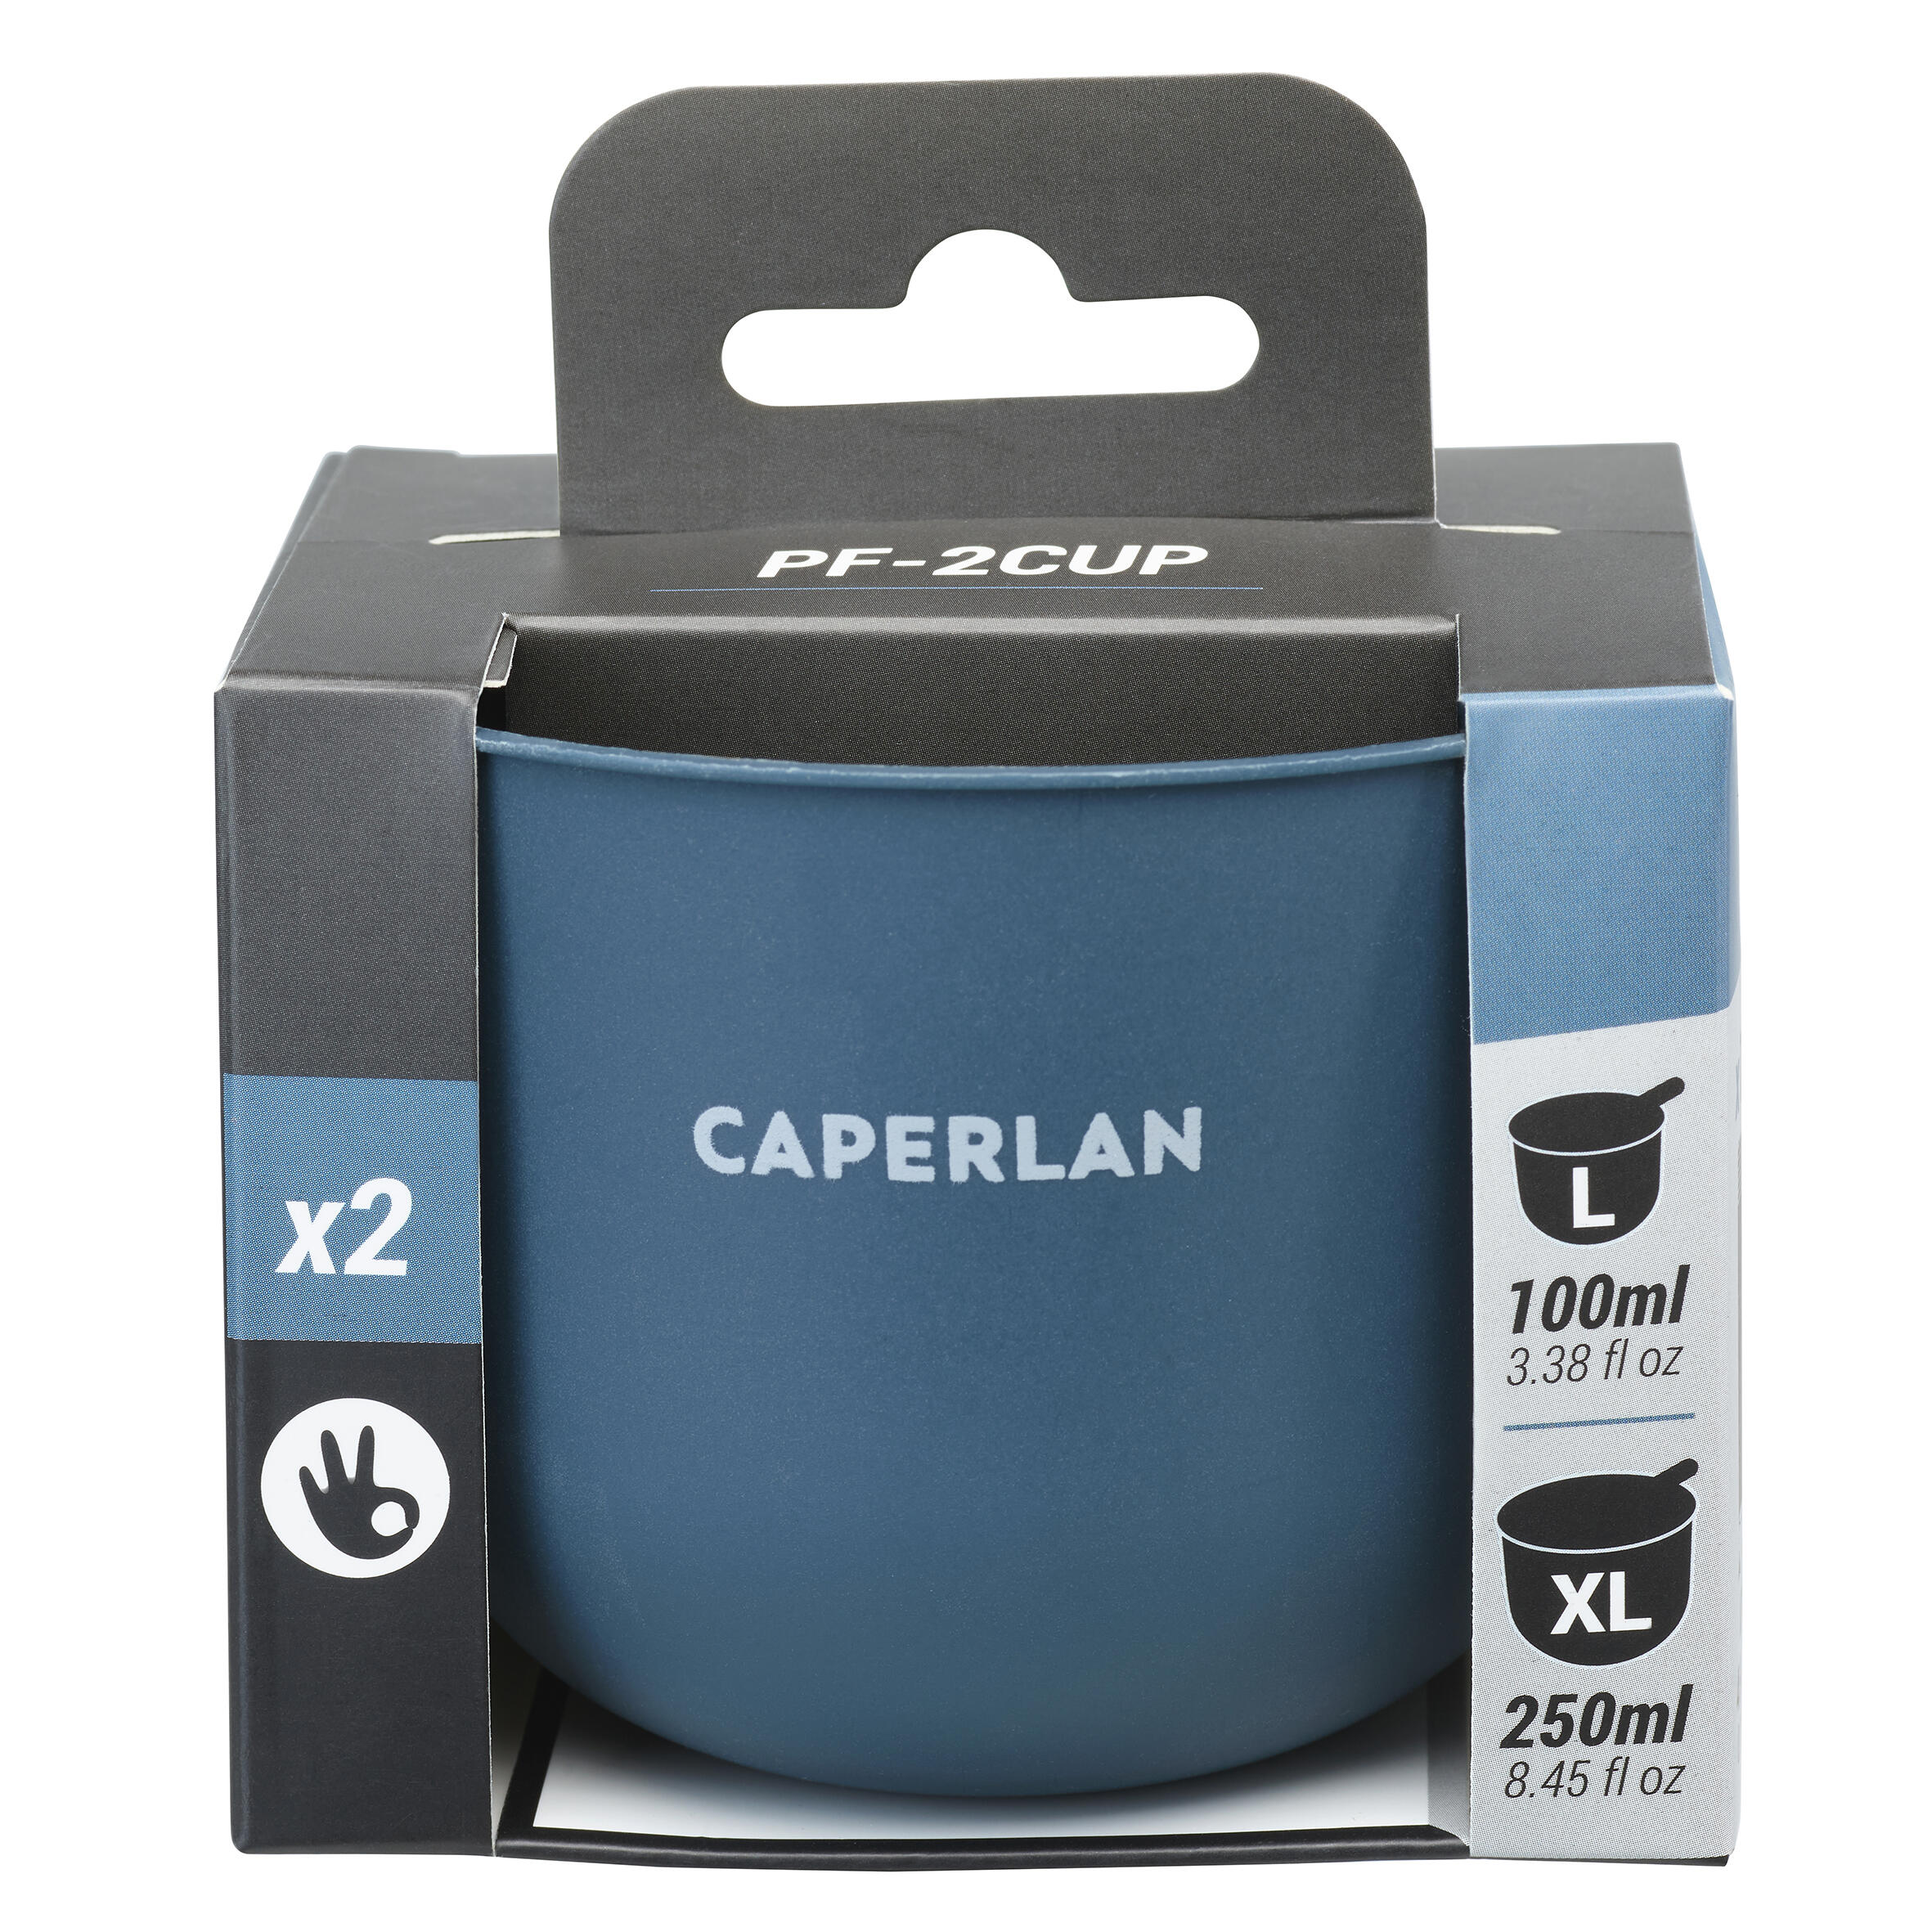 CAPERLAN 2 BAITING CUPS PF-2CUP 100 ml / 250 ml